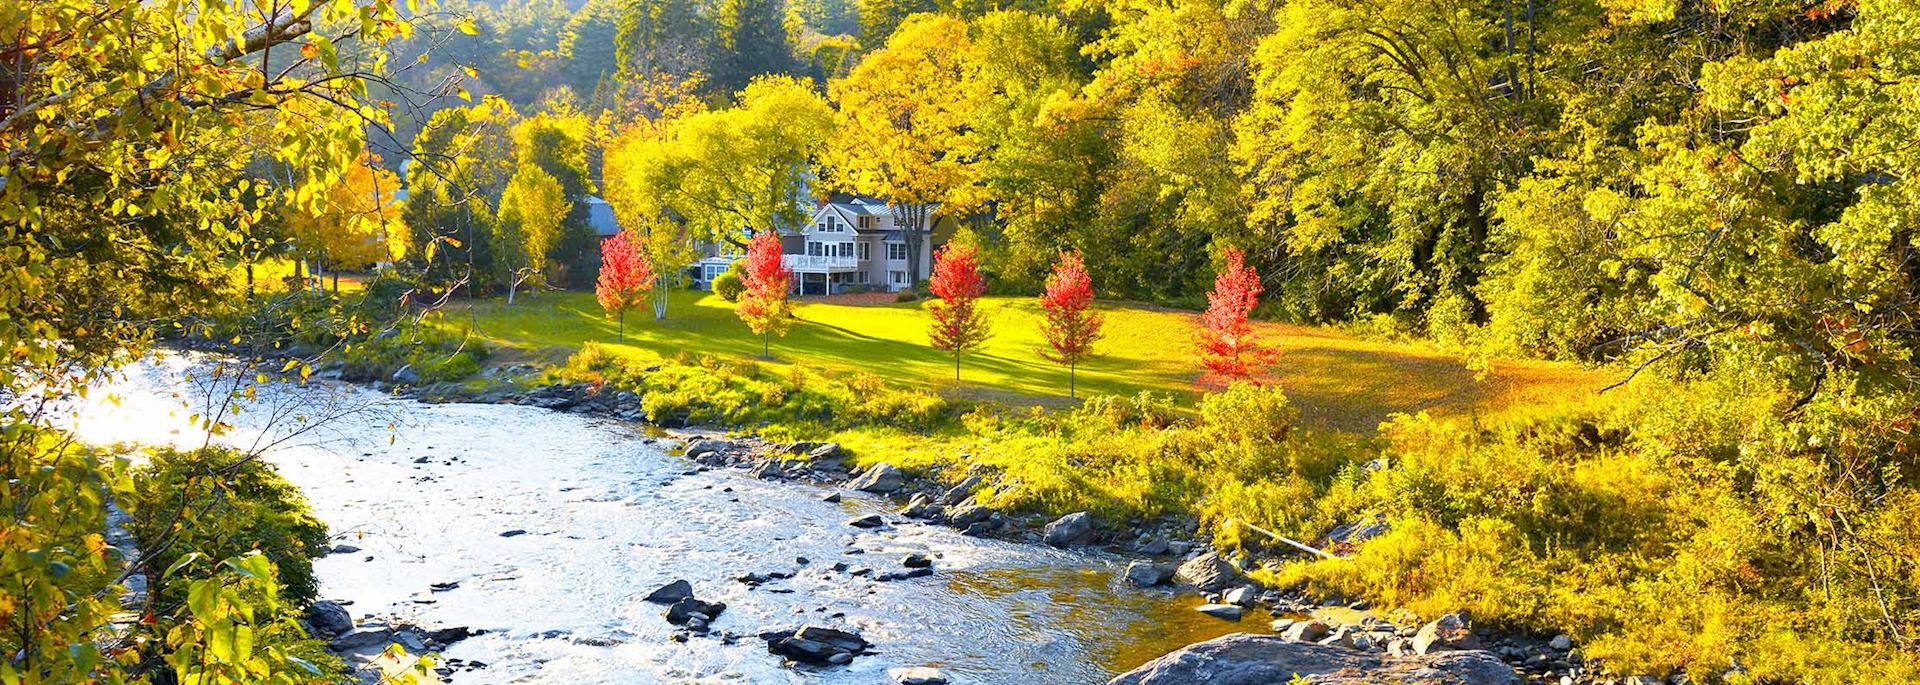 Ottauquechee River in Woodstock, Vermont